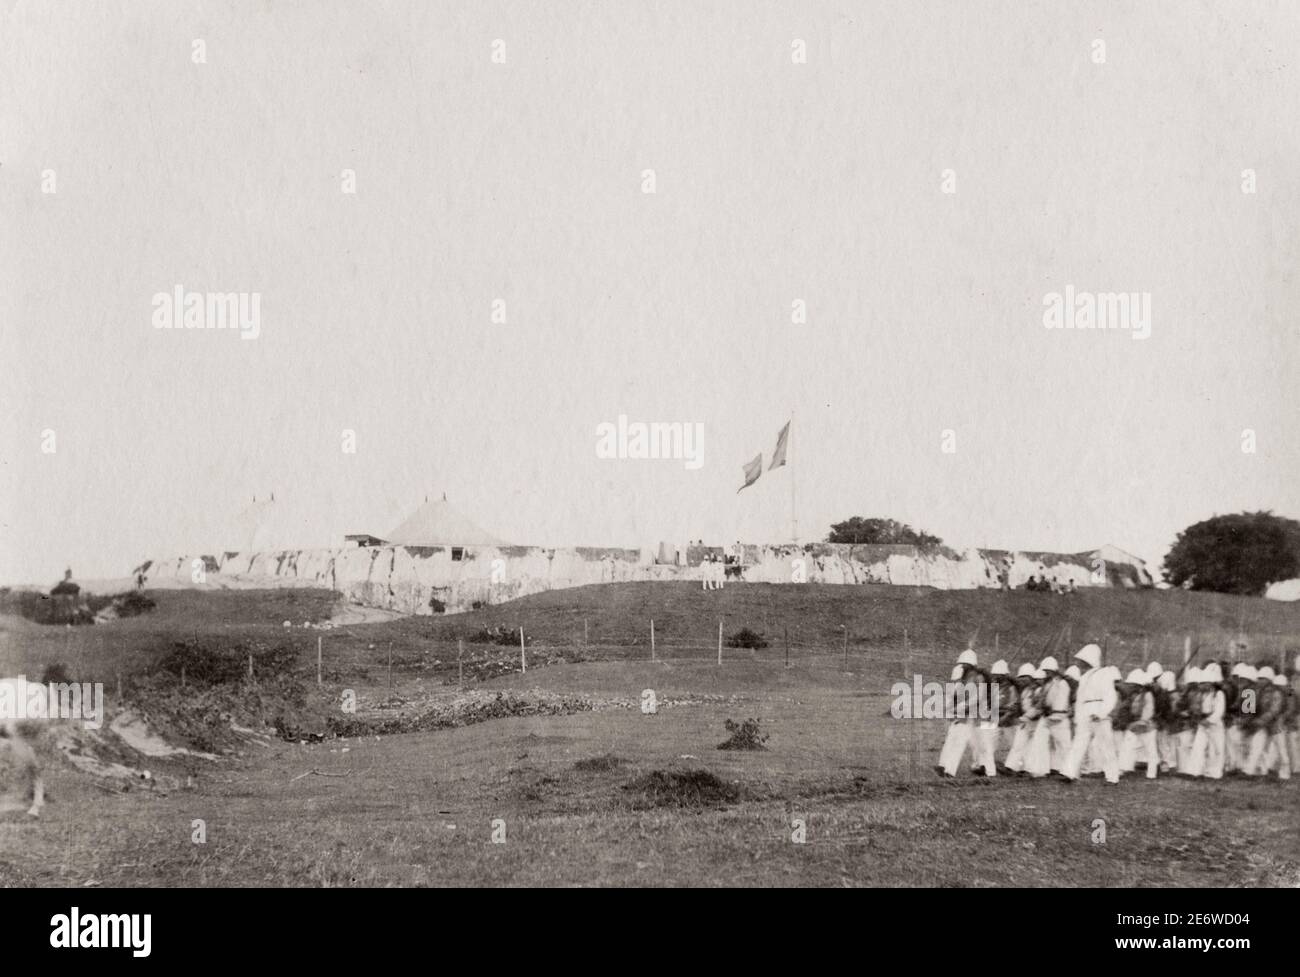 Vintage 19th century photograph: Captioned 'Hova Fort' Tamatave, Toamasina, Madagascar, French soldiers marching past; presumably Fort Manda. Stock Photo